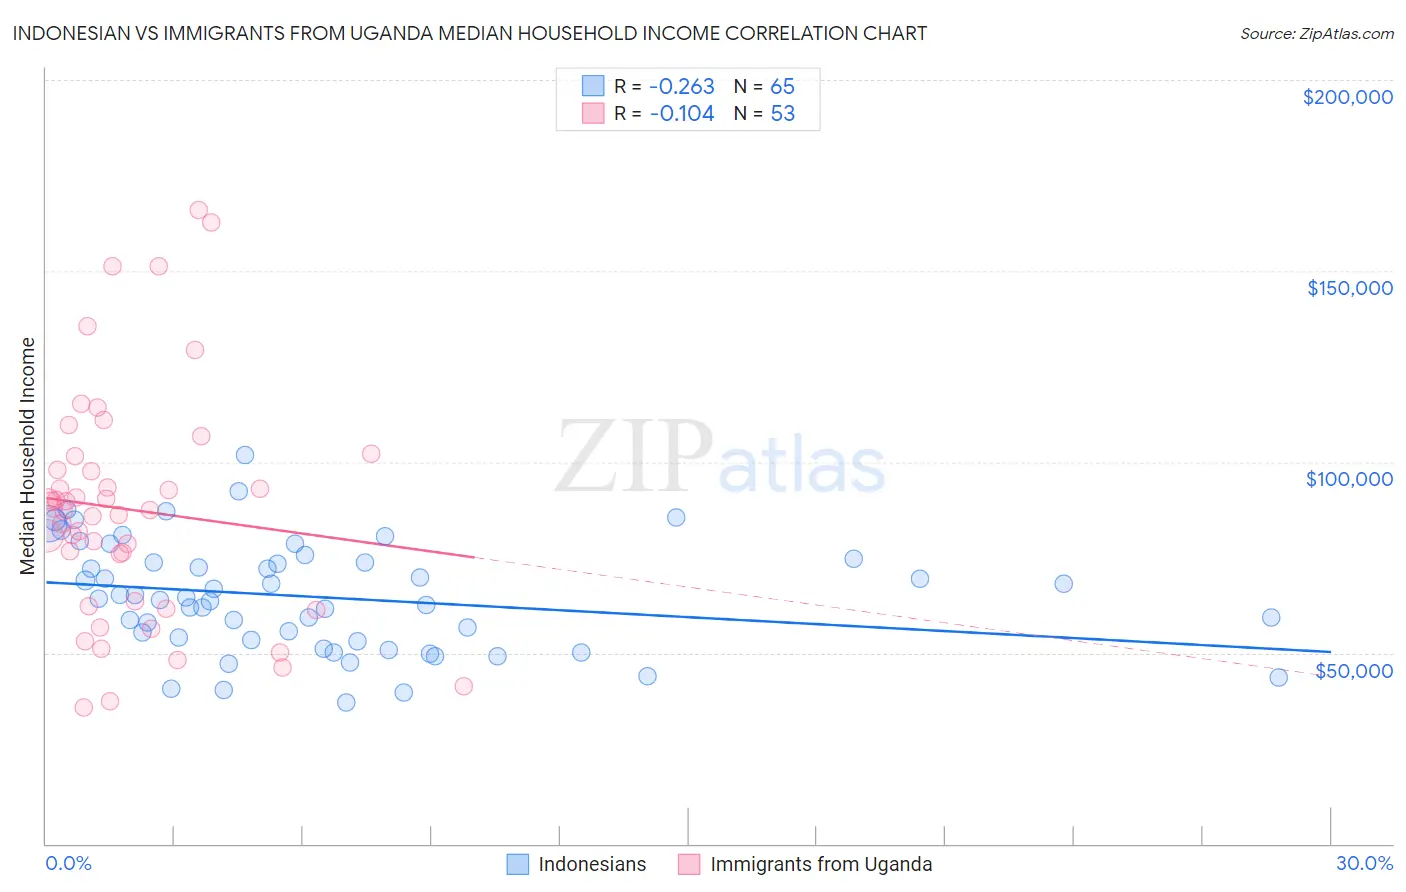 Indonesian vs Immigrants from Uganda Median Household Income